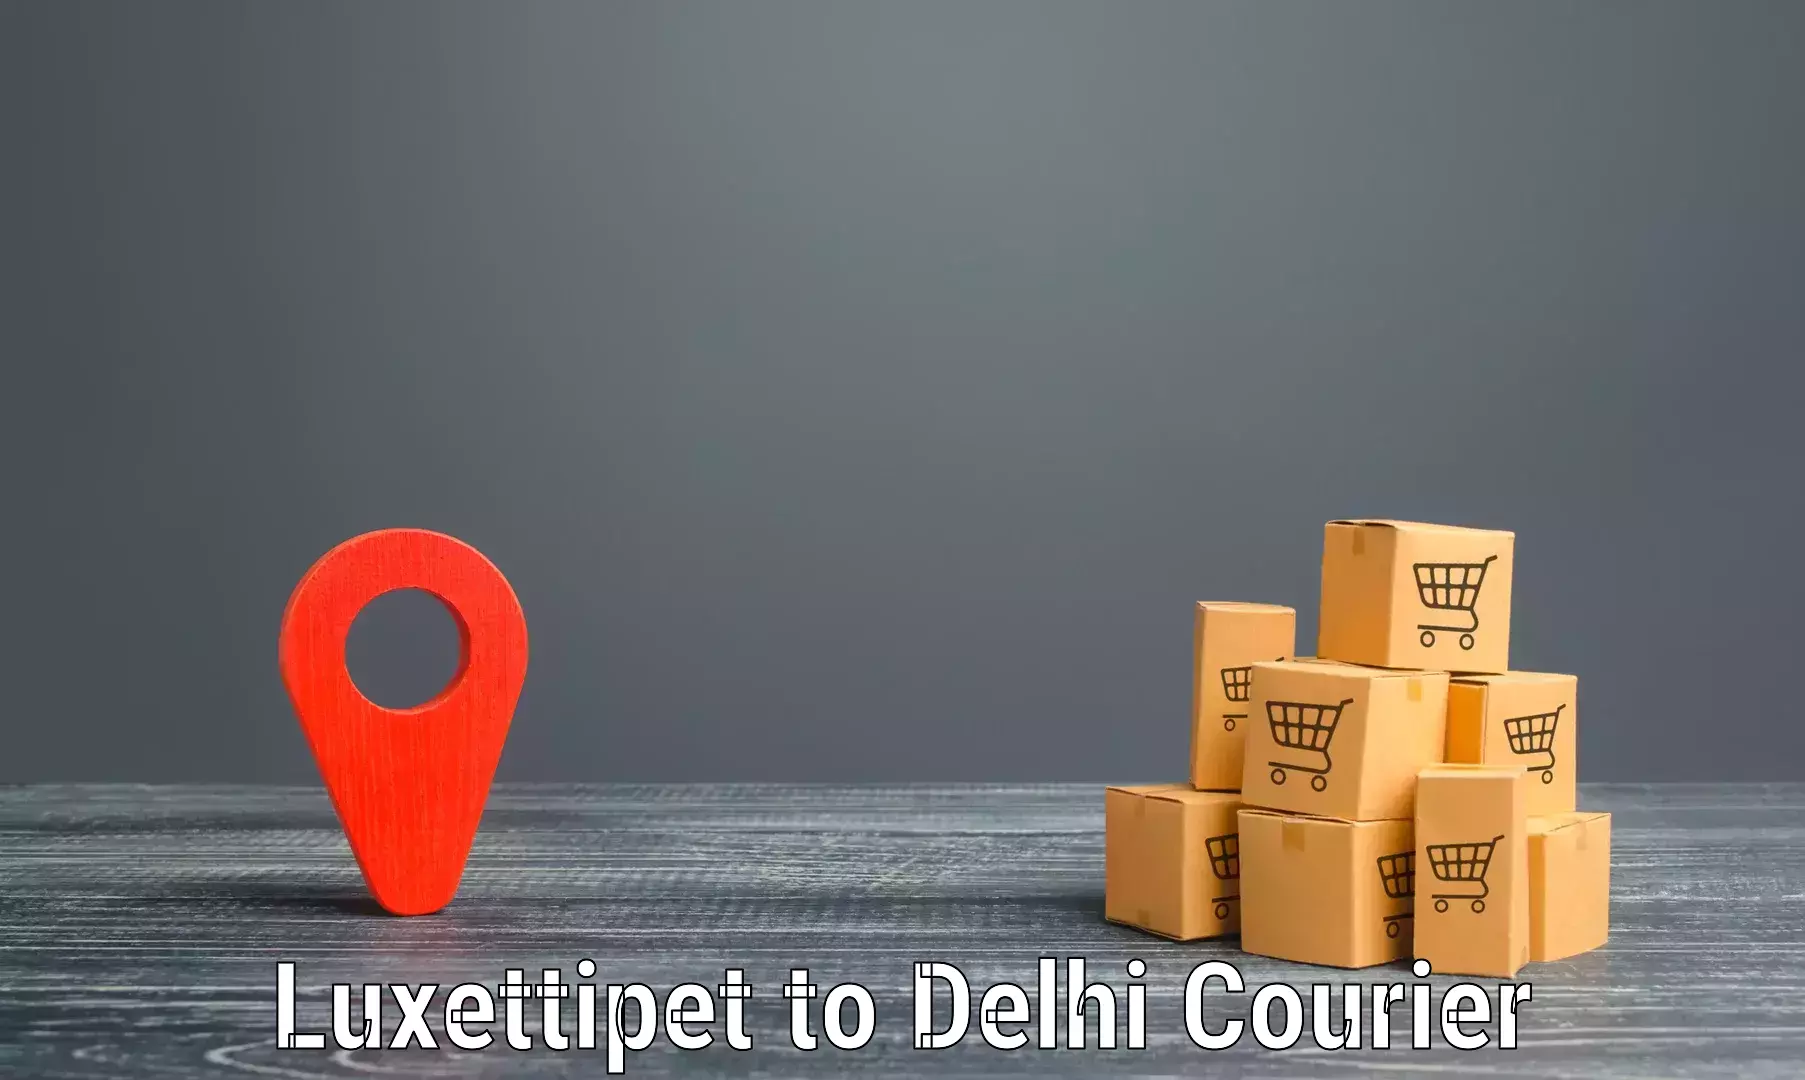 Courier service innovation Luxettipet to Guru Gobind Singh Indraprastha University New Delhi